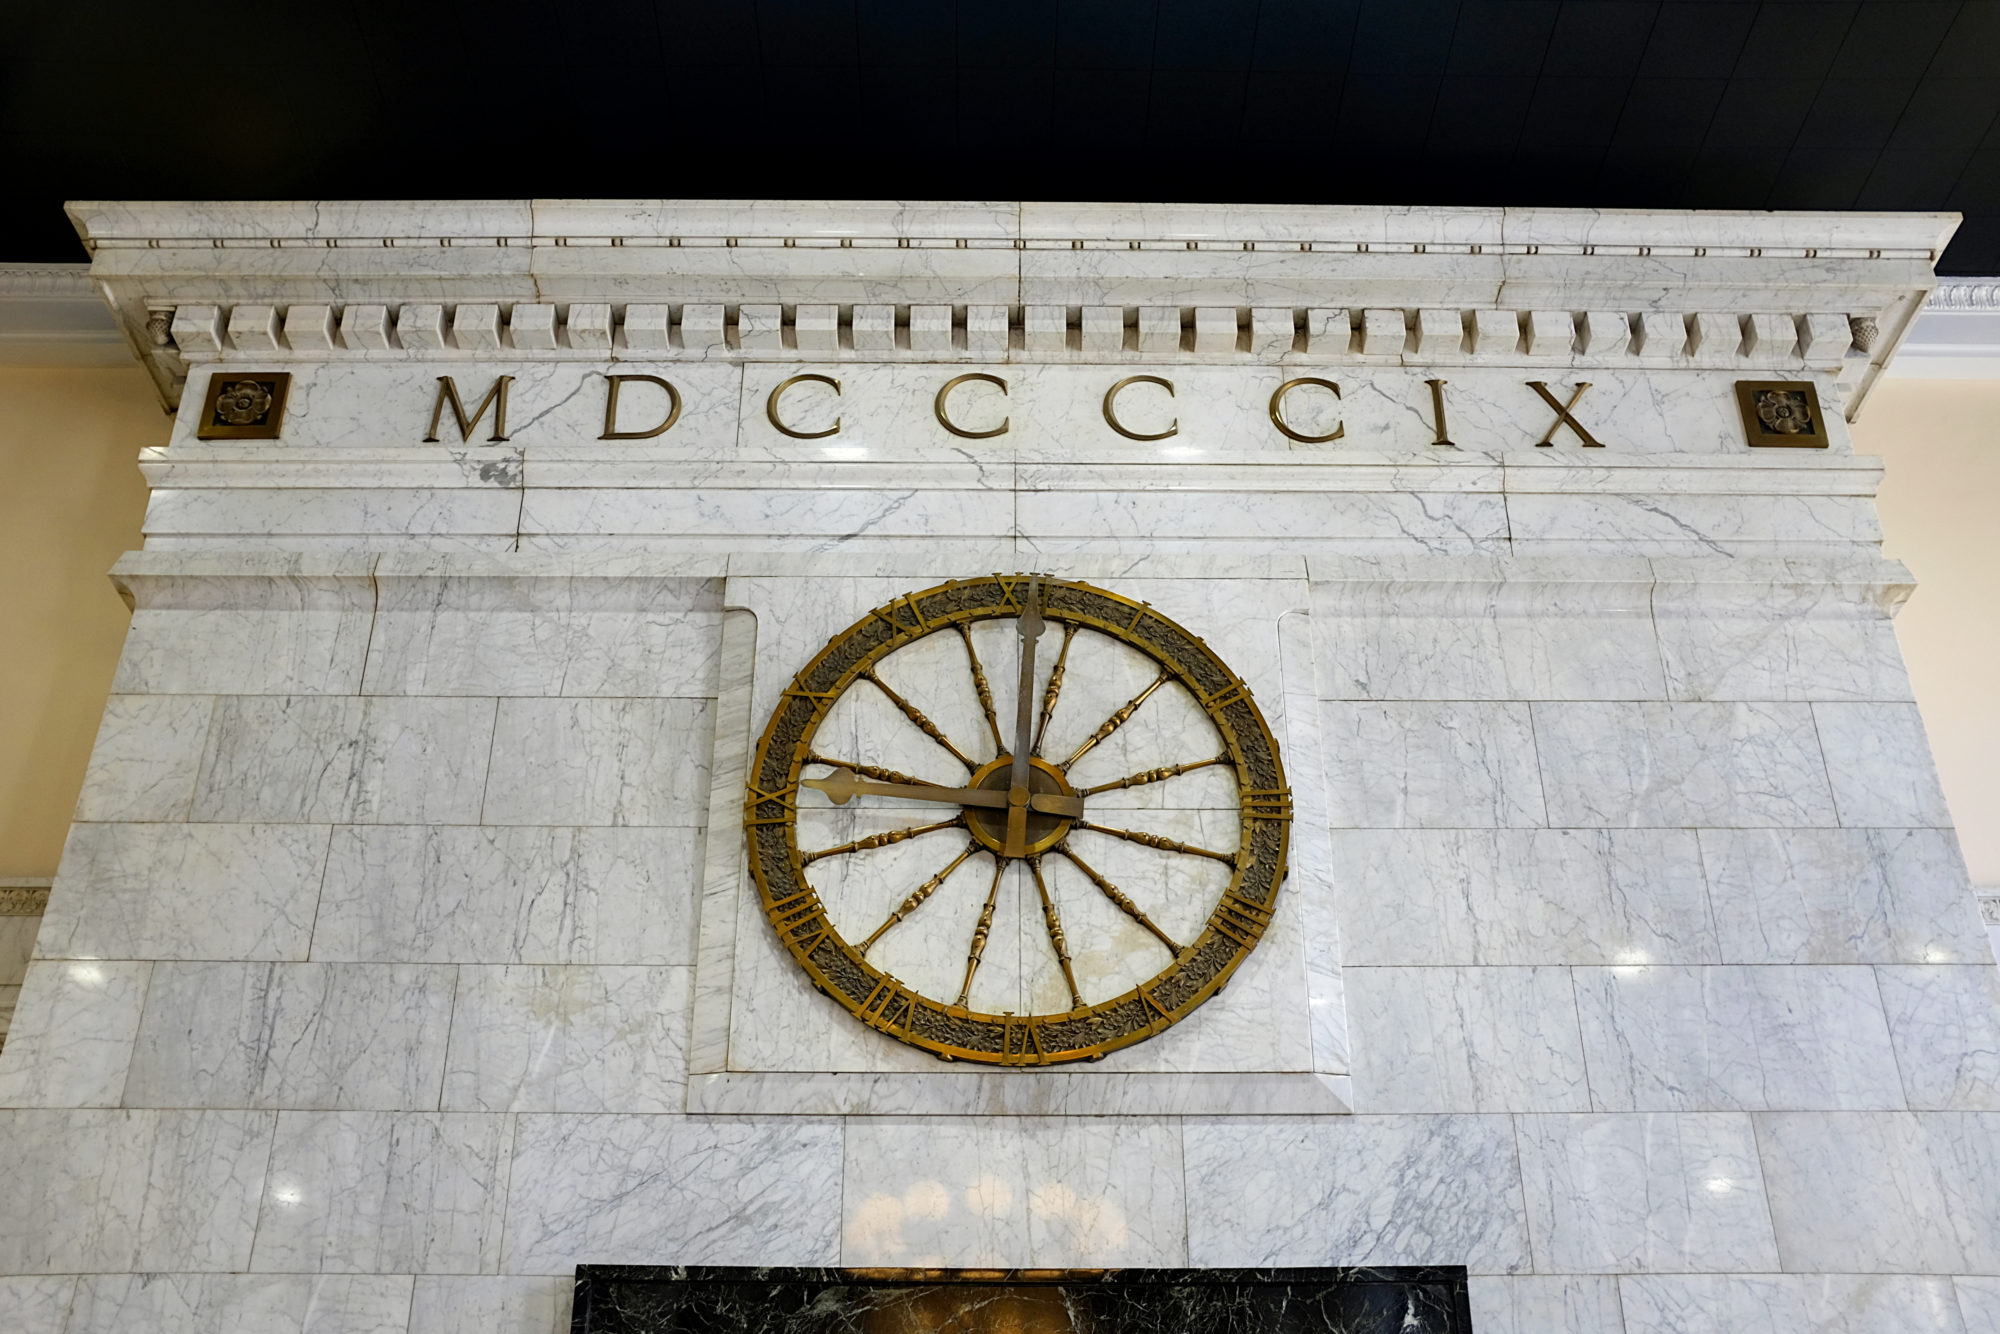 Roman numerals reading MDCCCIX over the vault